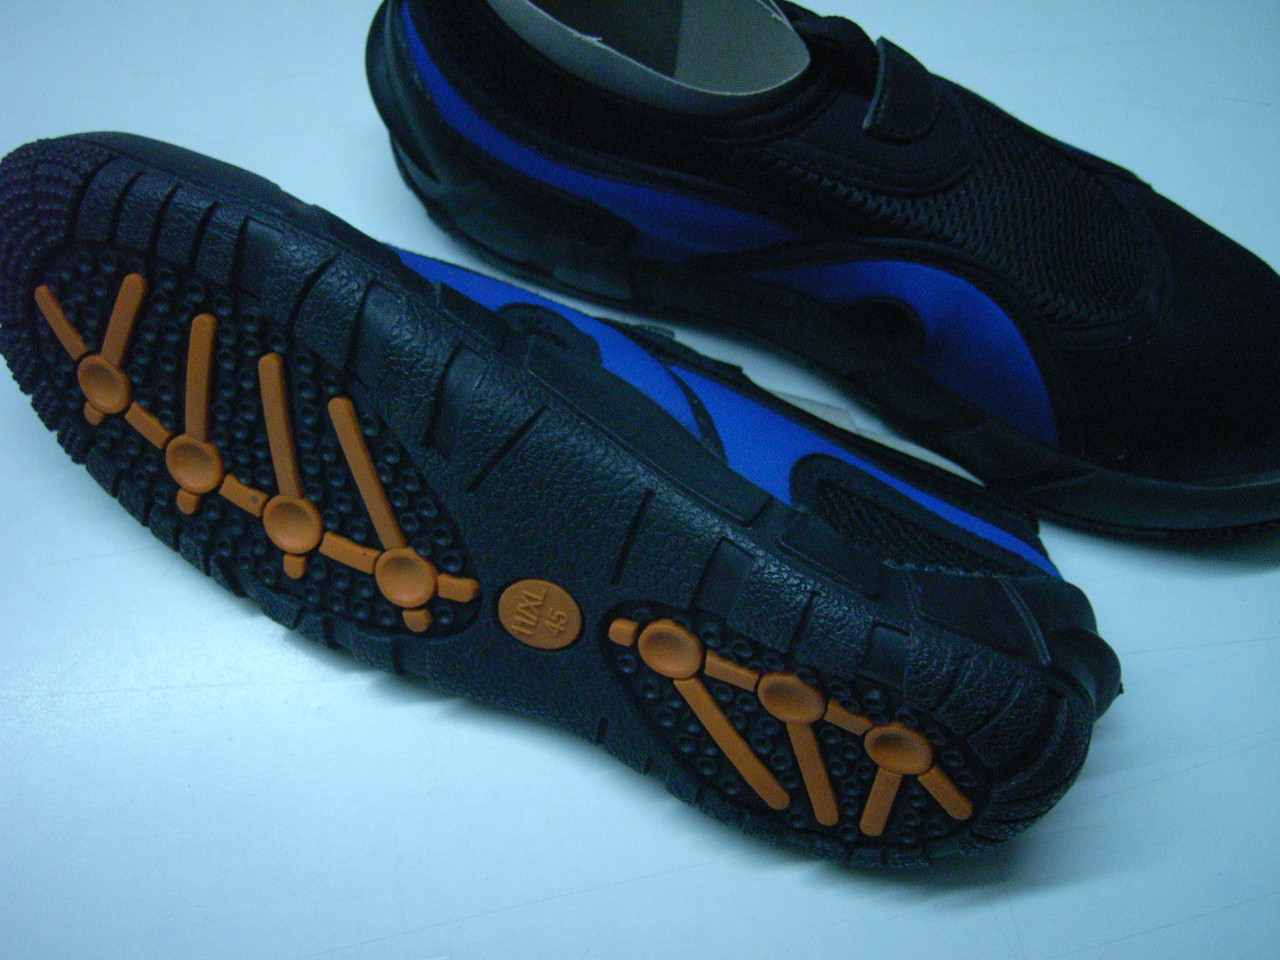 Wassersportschuhe, Aqua Shoes, Abverkaufspreis